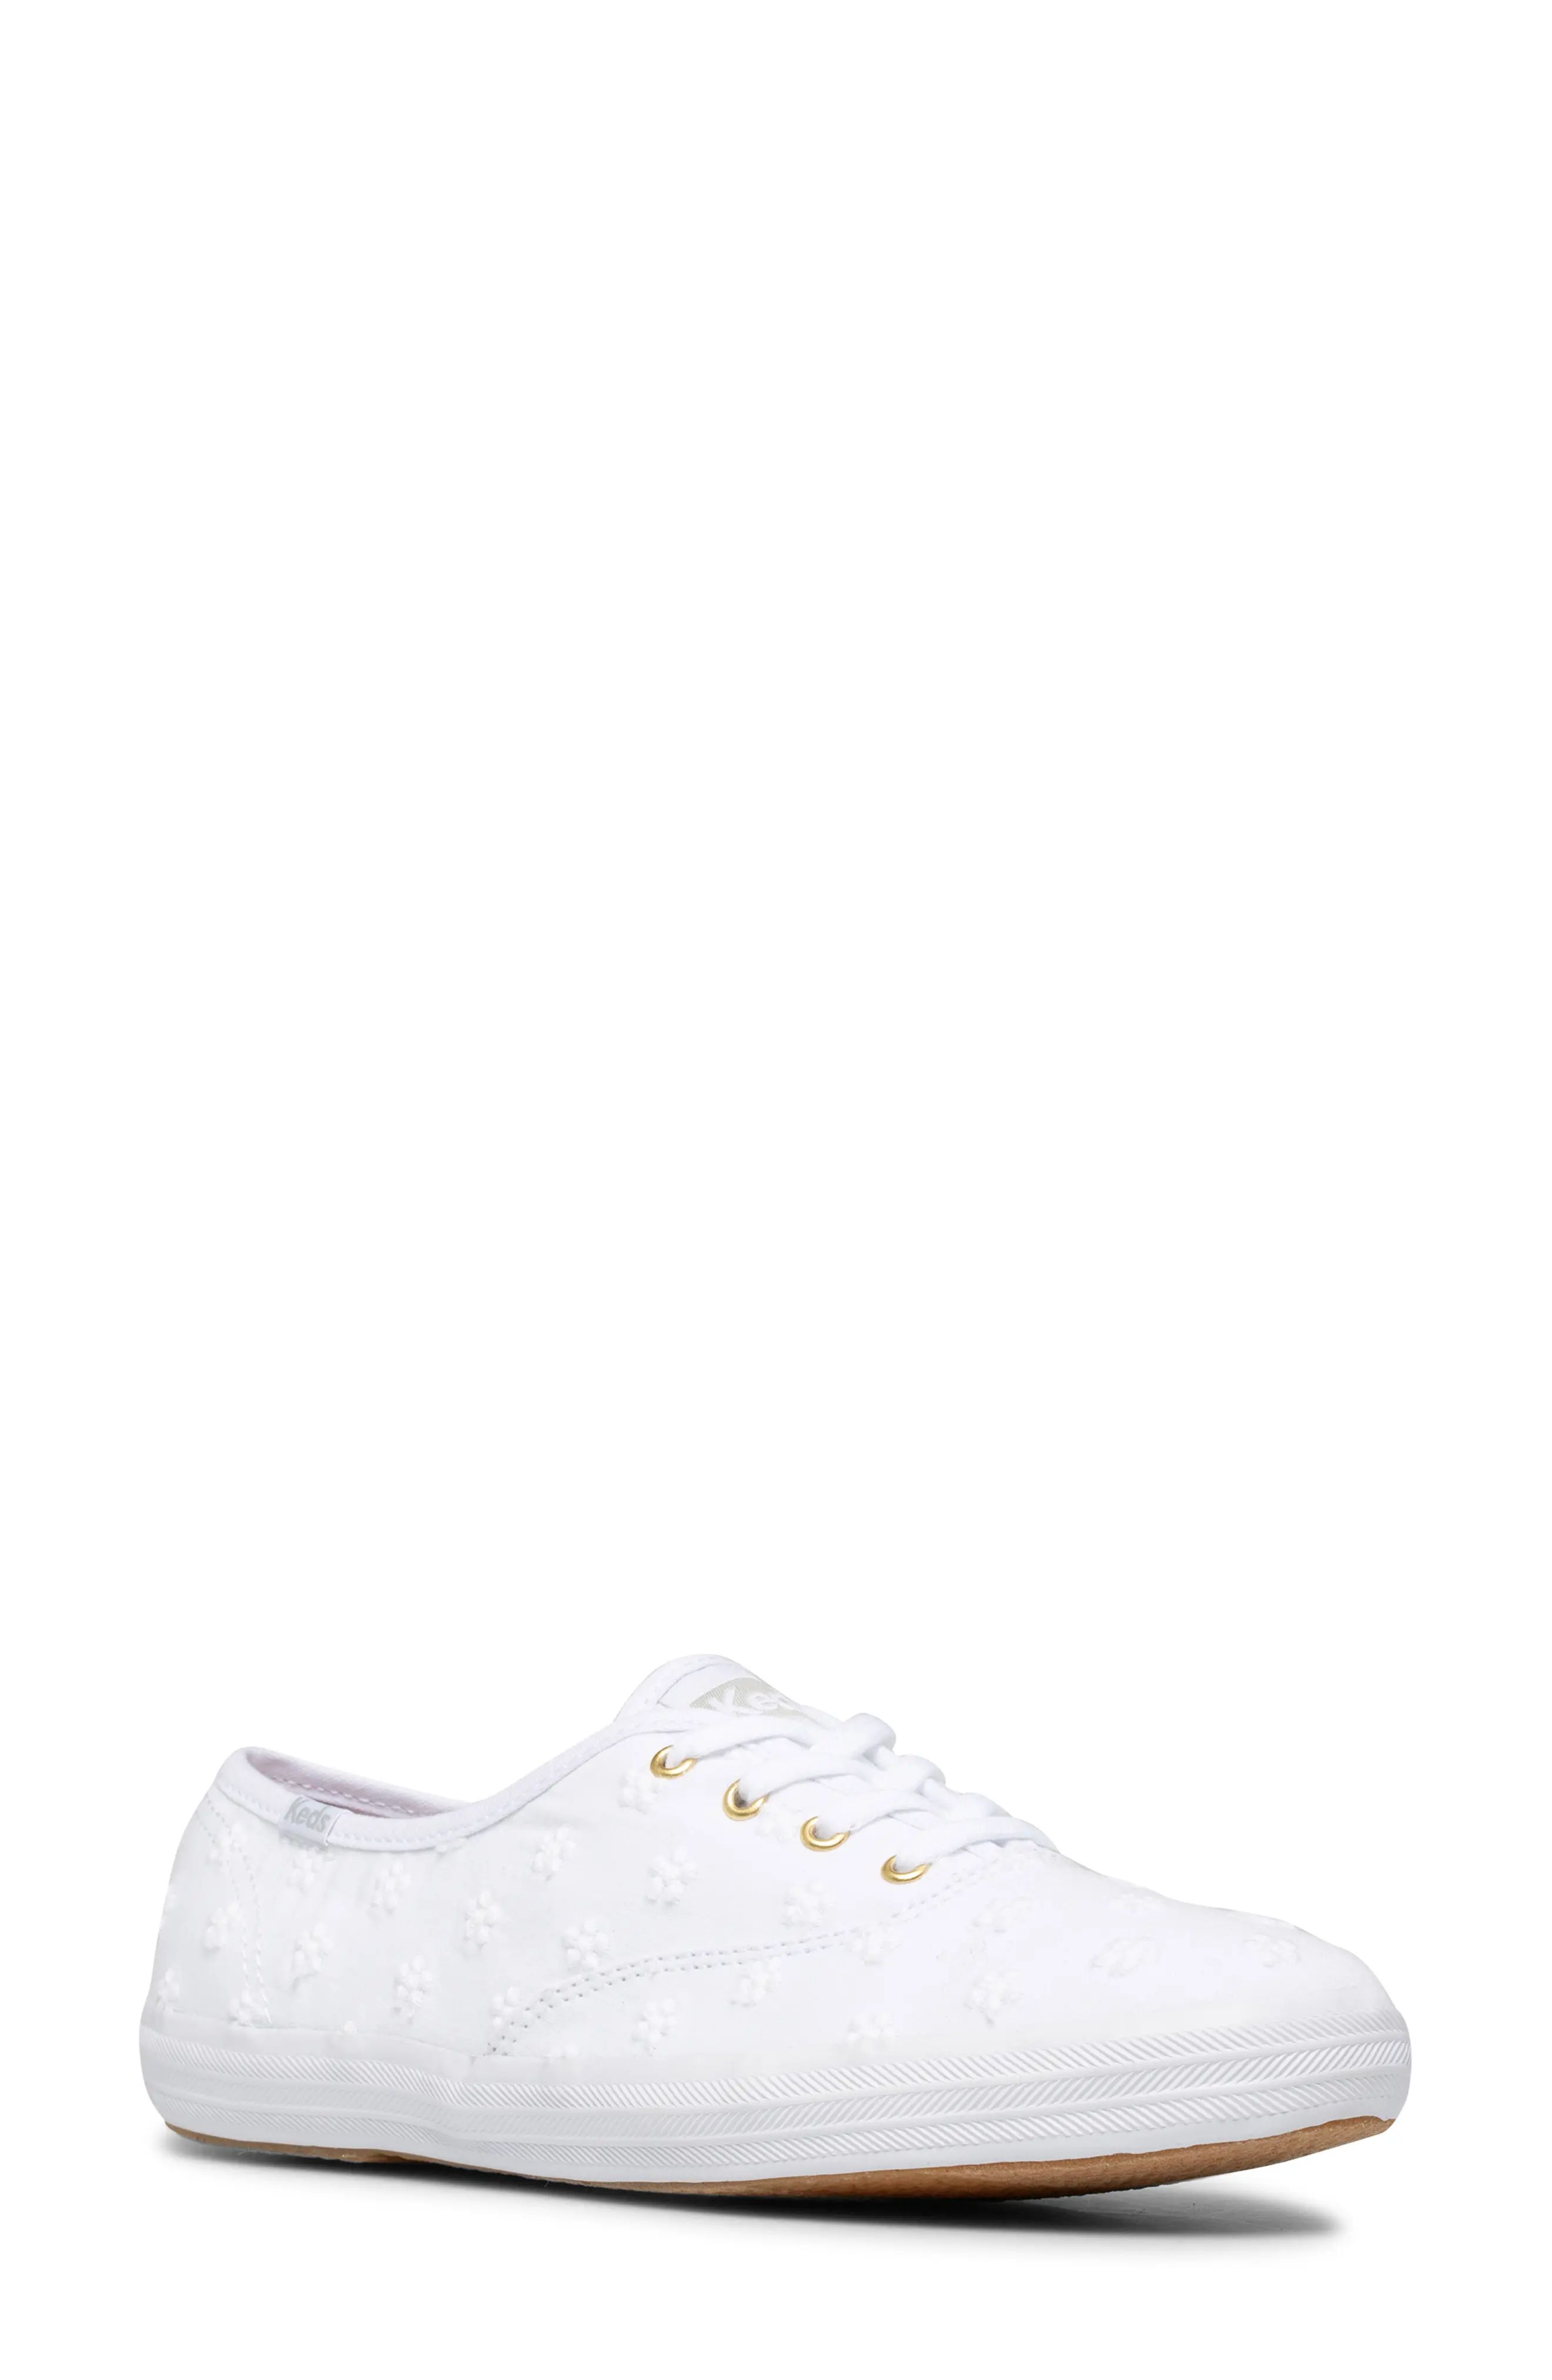 Keds(R) Champion Daisy Eyelet Sneaker in White at Nordstrom, Size 10 | Nordstrom